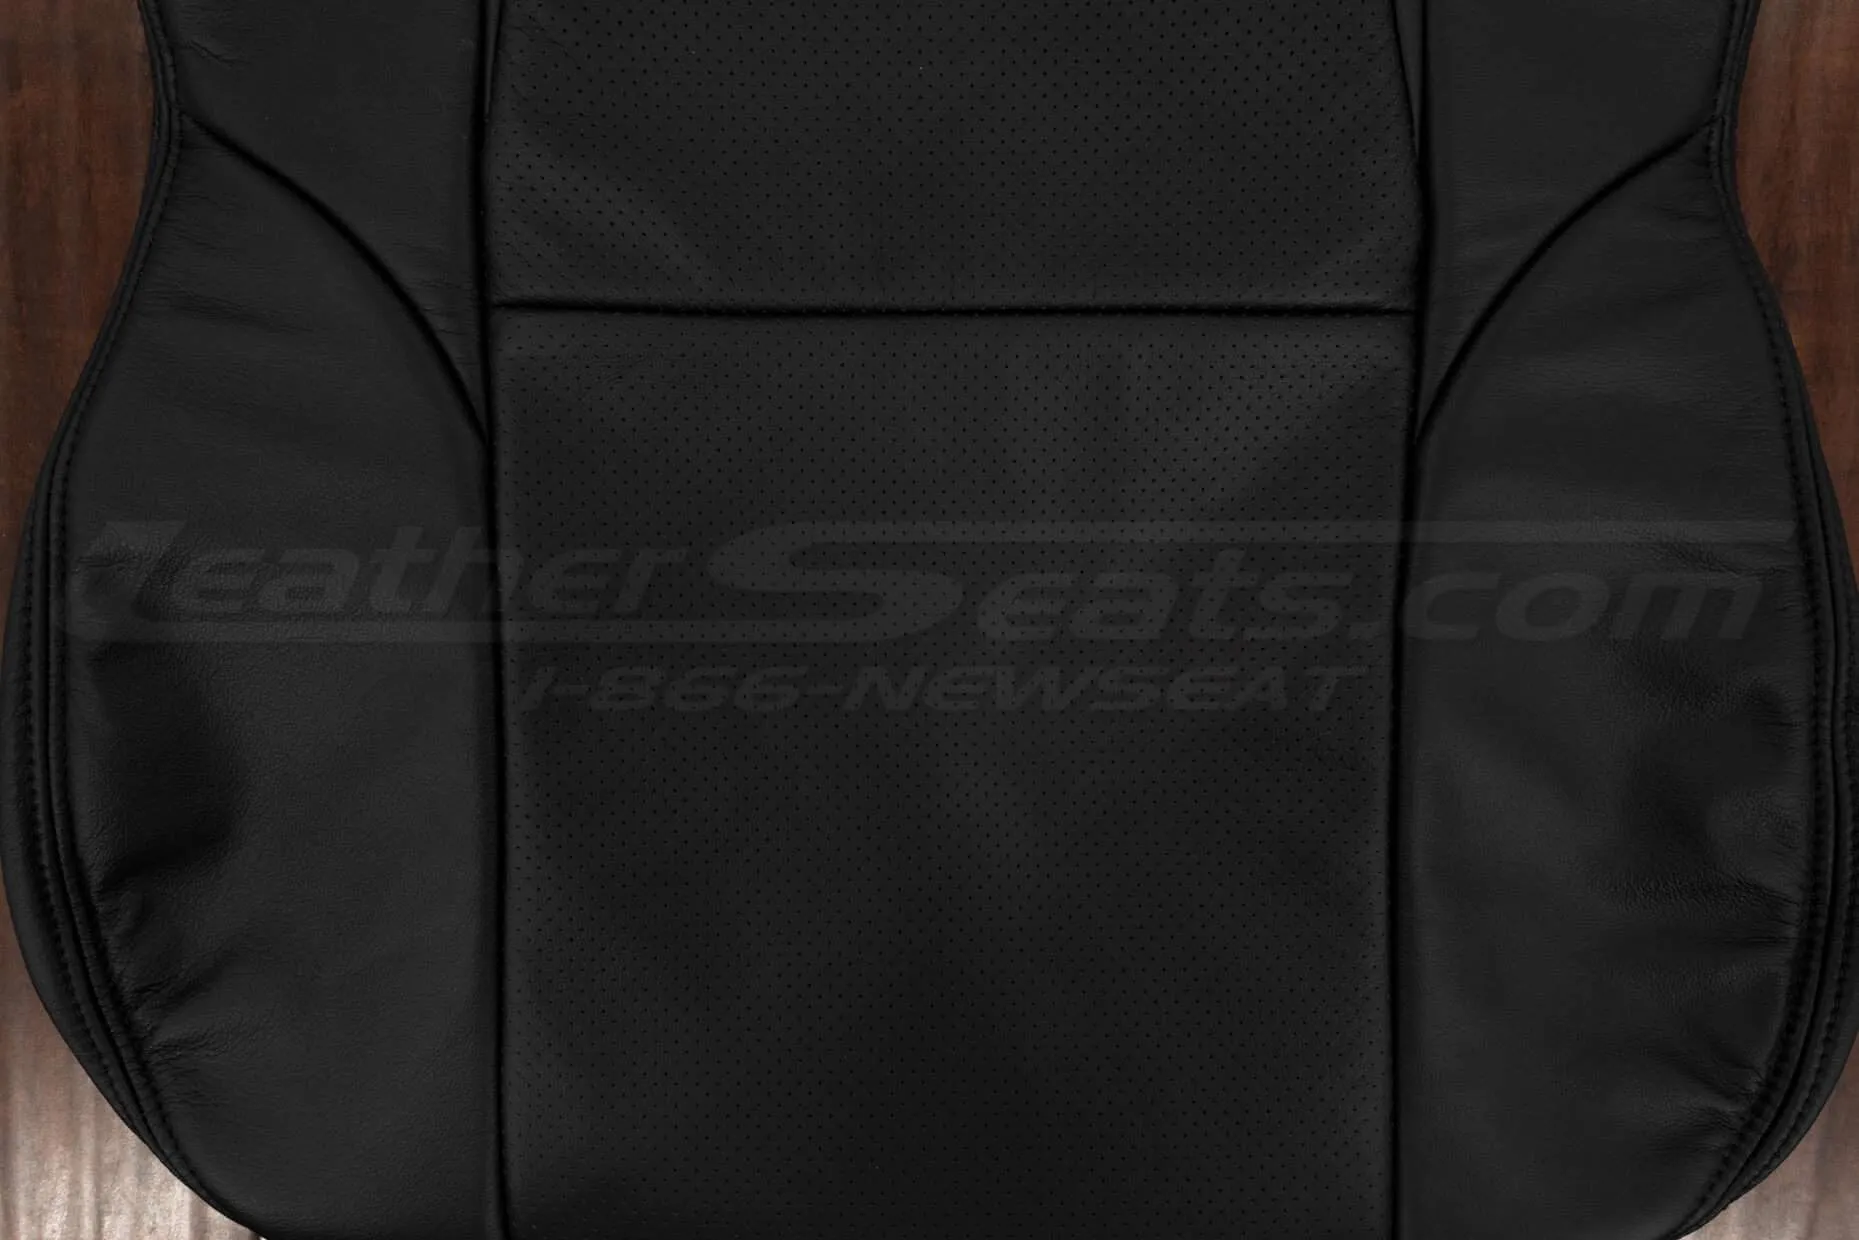 04-06 Pontiac GTO Leather Kit - Ecstasy Black - Backrest bottom insert and perforation